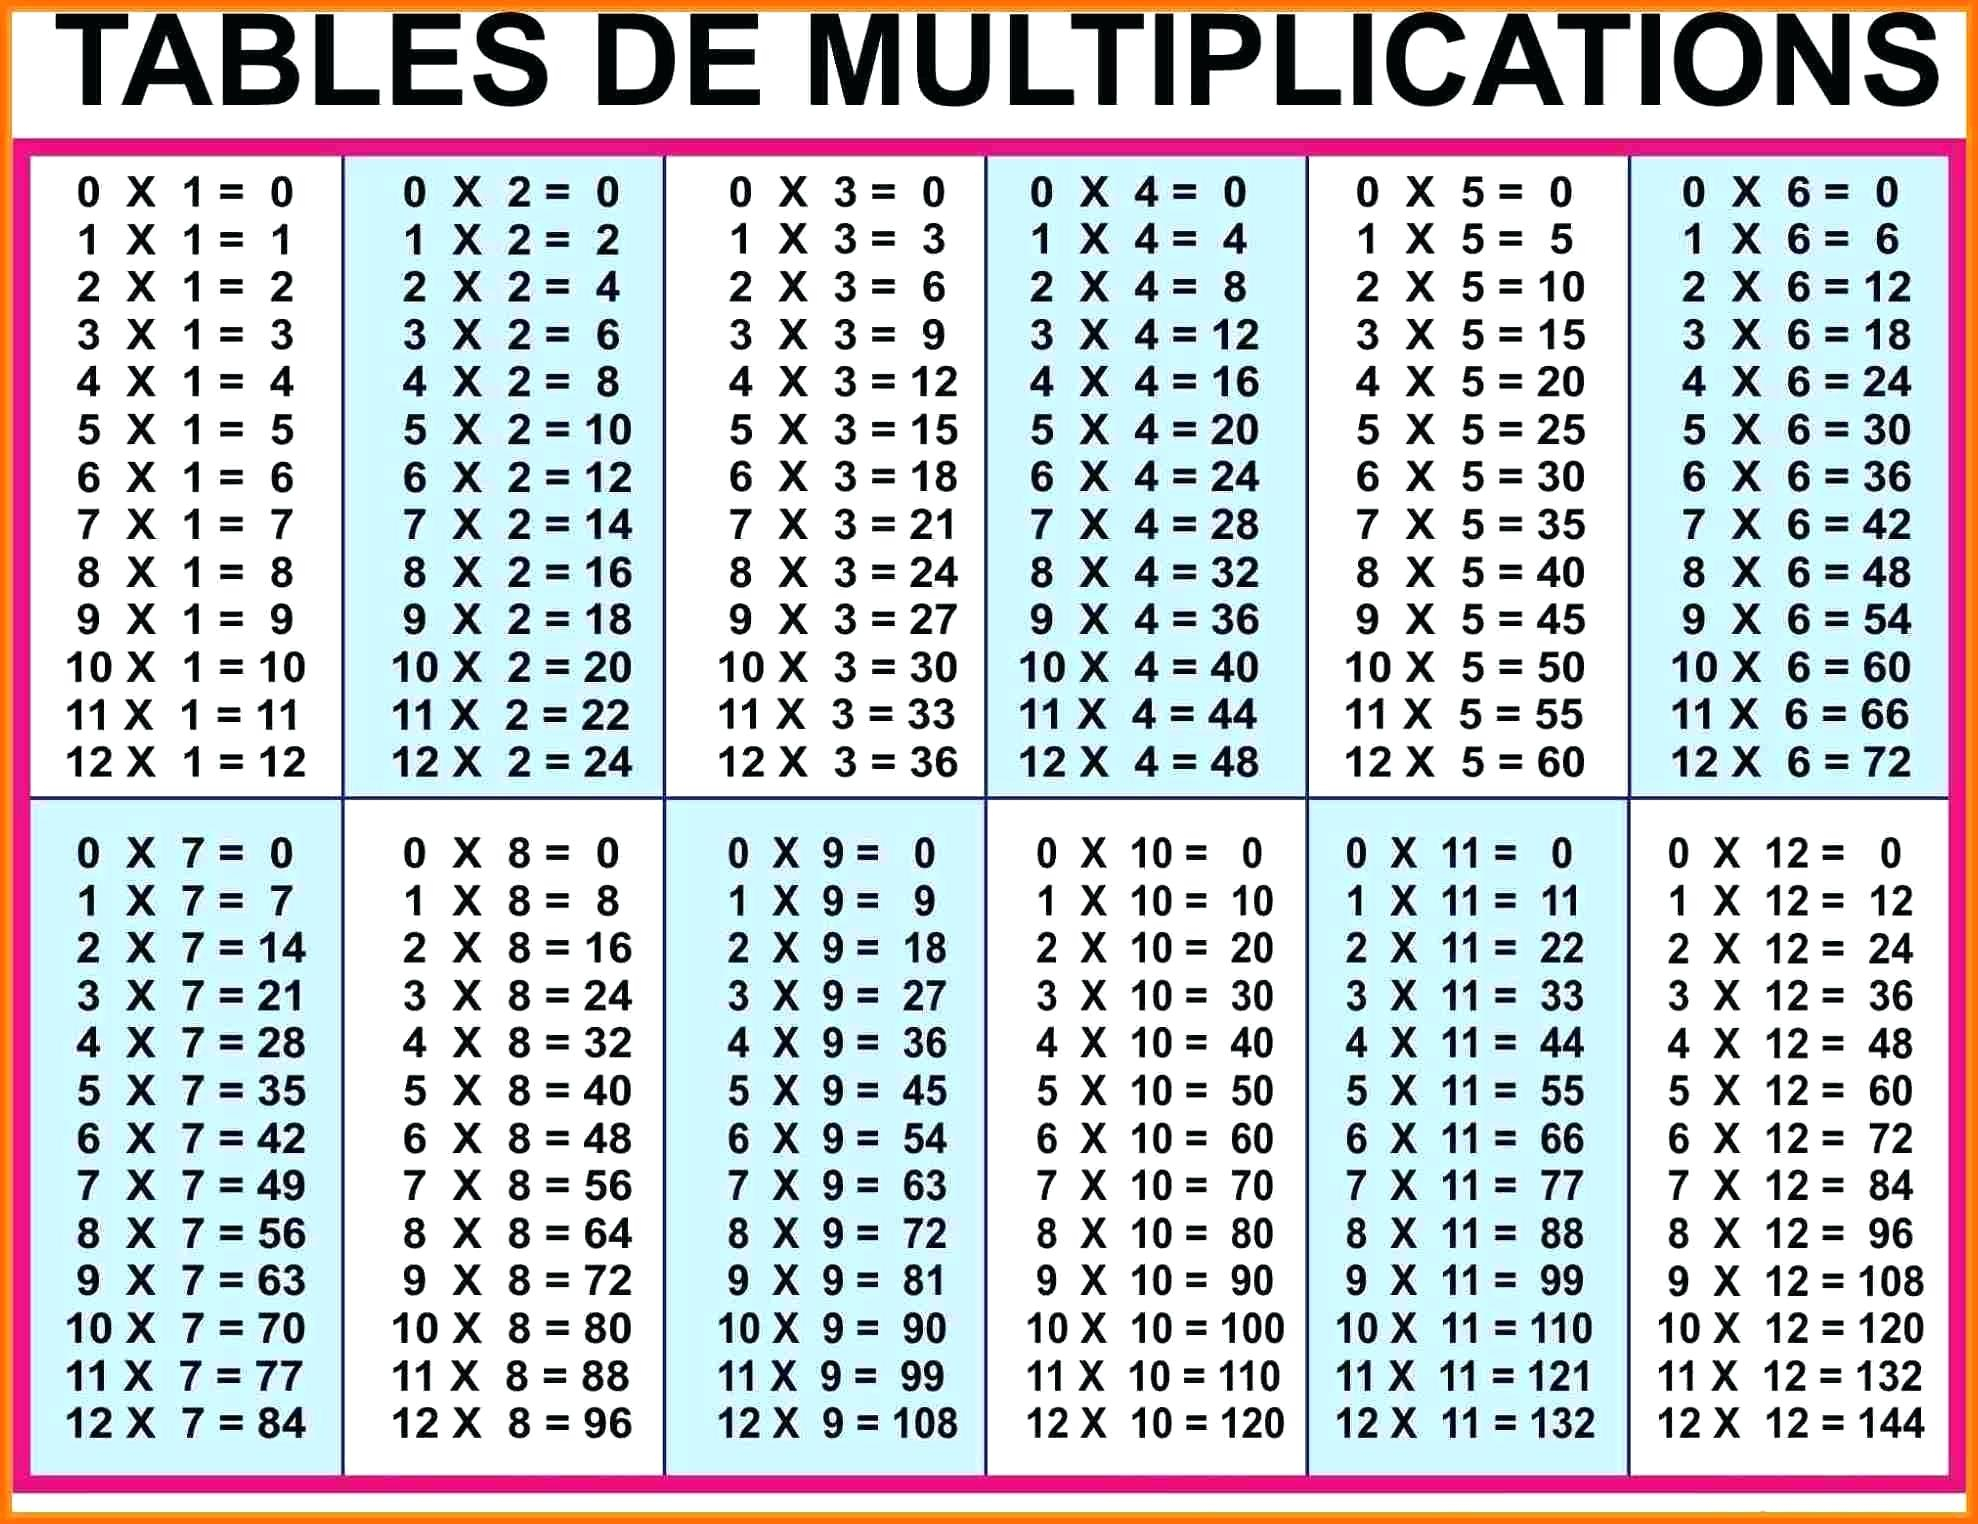 Multiplication Table Worksheets 1 12 | Printable Worksheets in Printable Multiplication Table 1-12